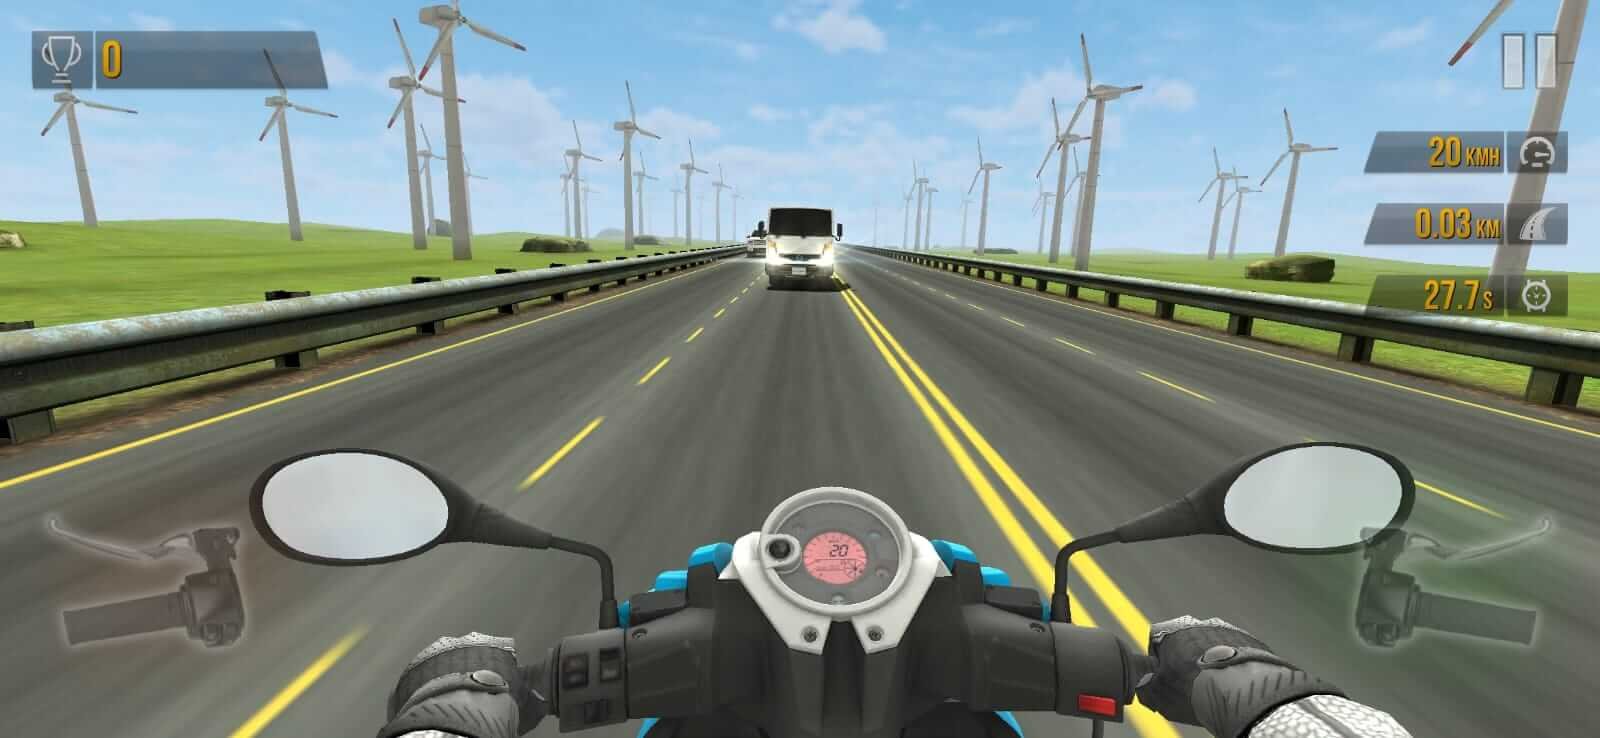 Baixar Traffic Rider Dinheiro Infinito v1.98 Android